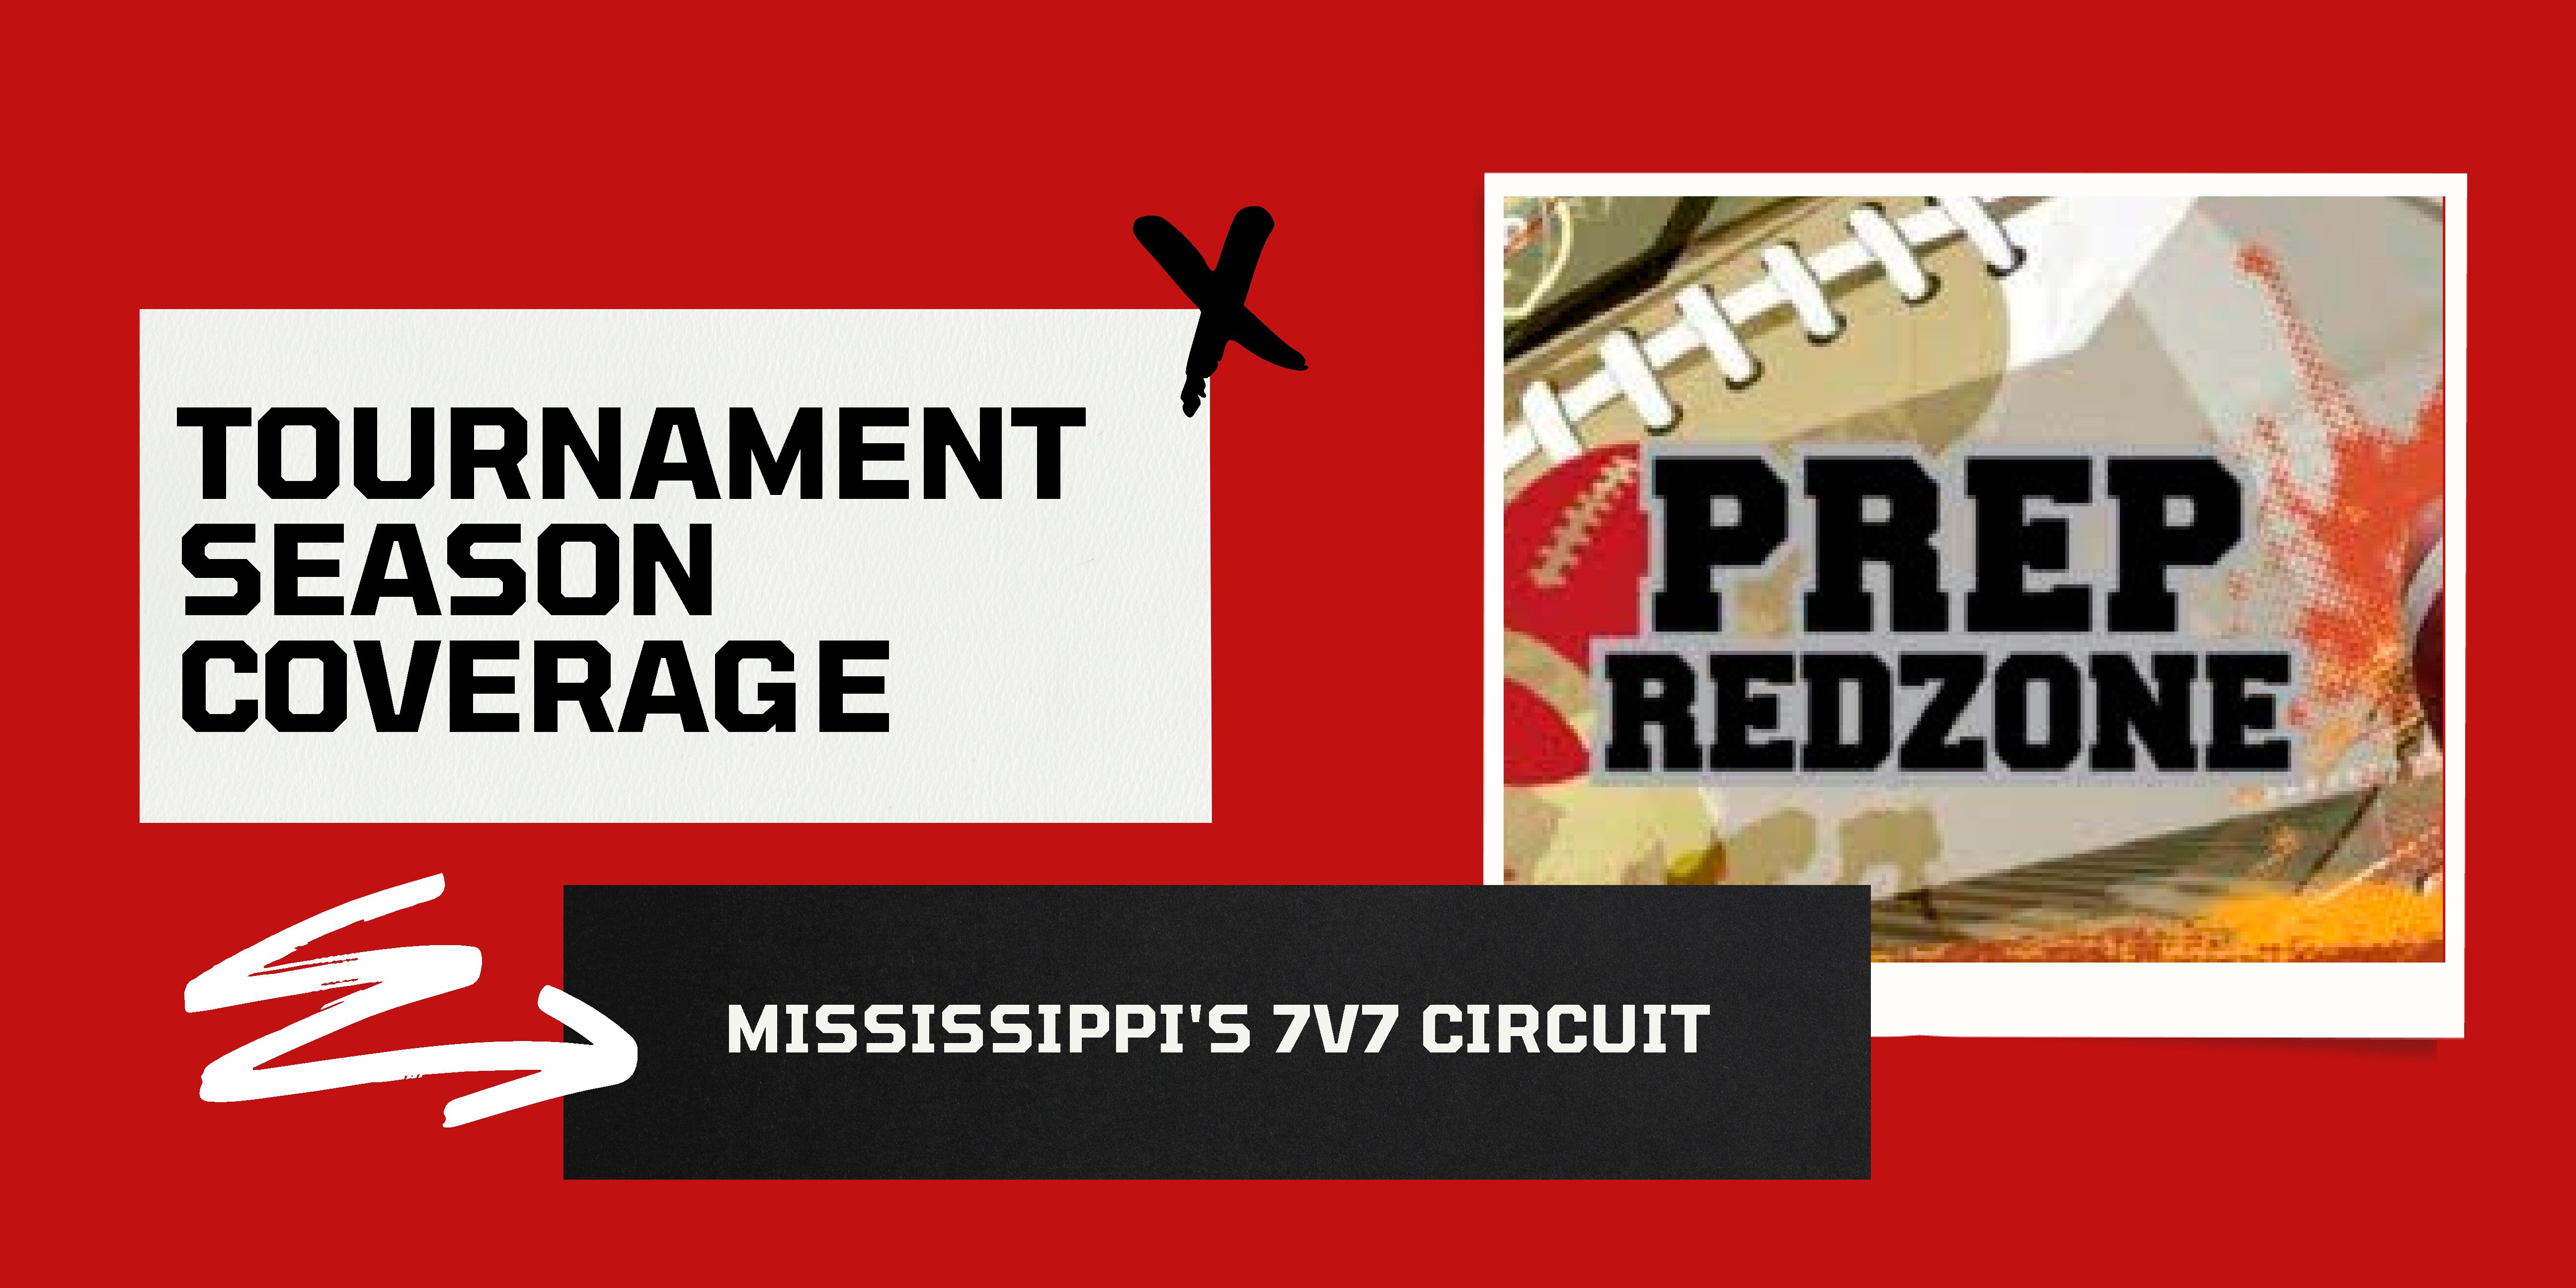 Tourney Season Spotlight: Mississippi 7v7 Circuit